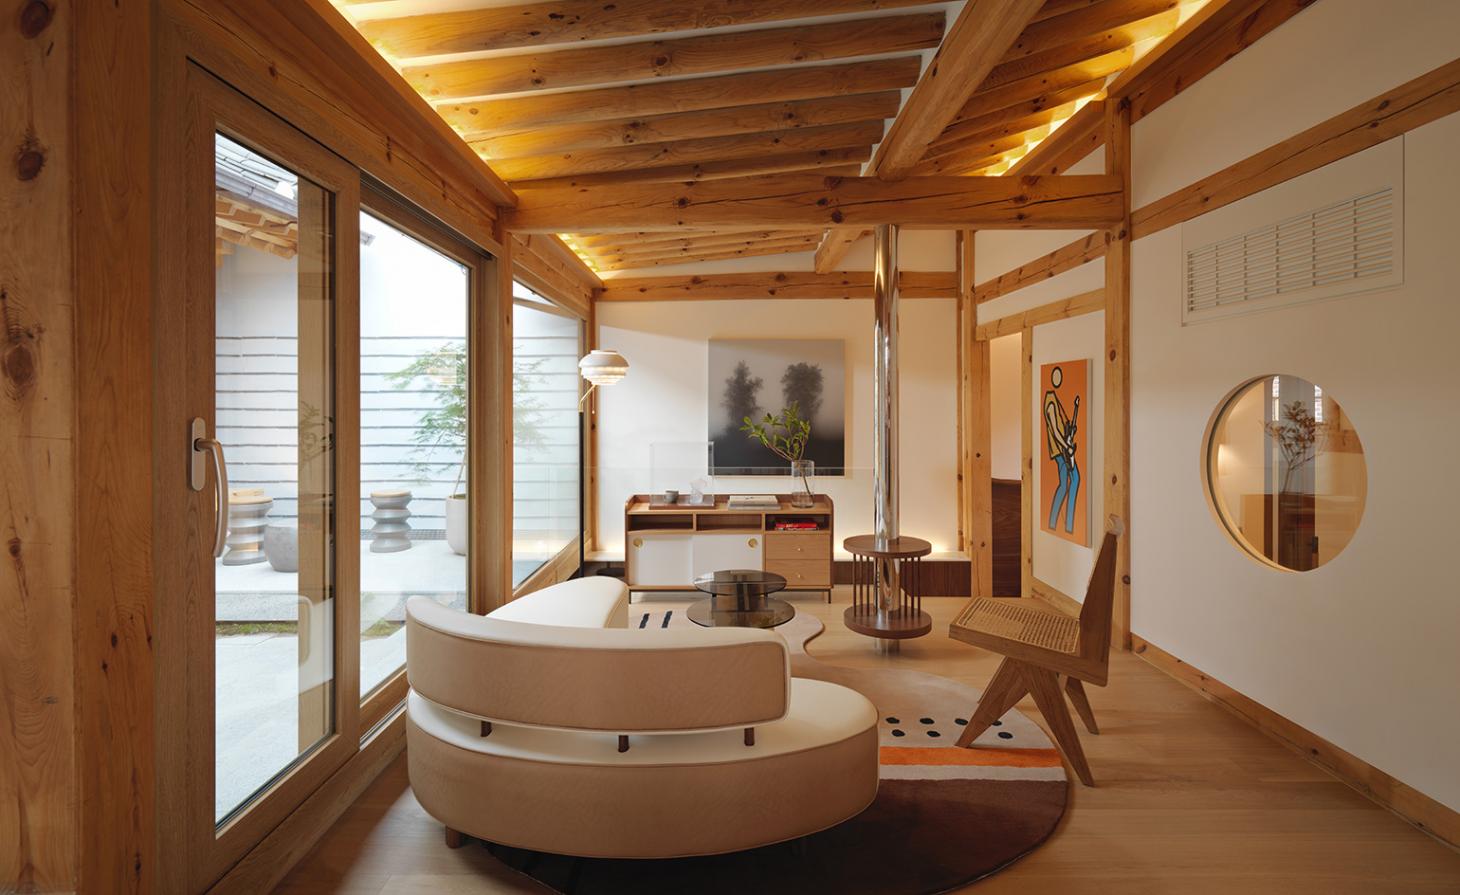 Newtro - Hanok-inspired home interior